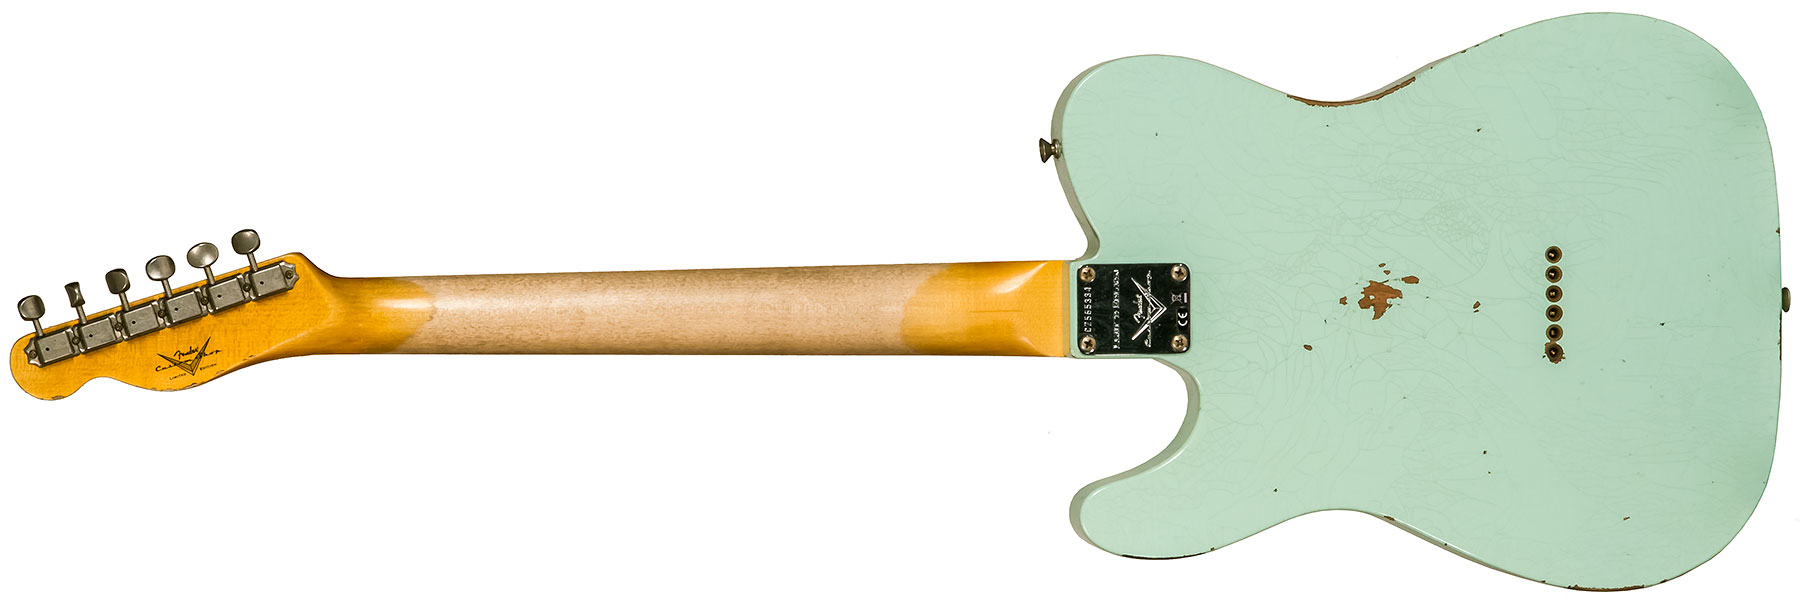 Fender Custom Shop Tele 1961 2s Ht Rw #cz565334 - Relic Faded Surf Green - E-Gitarre in Teleform - Variation 1